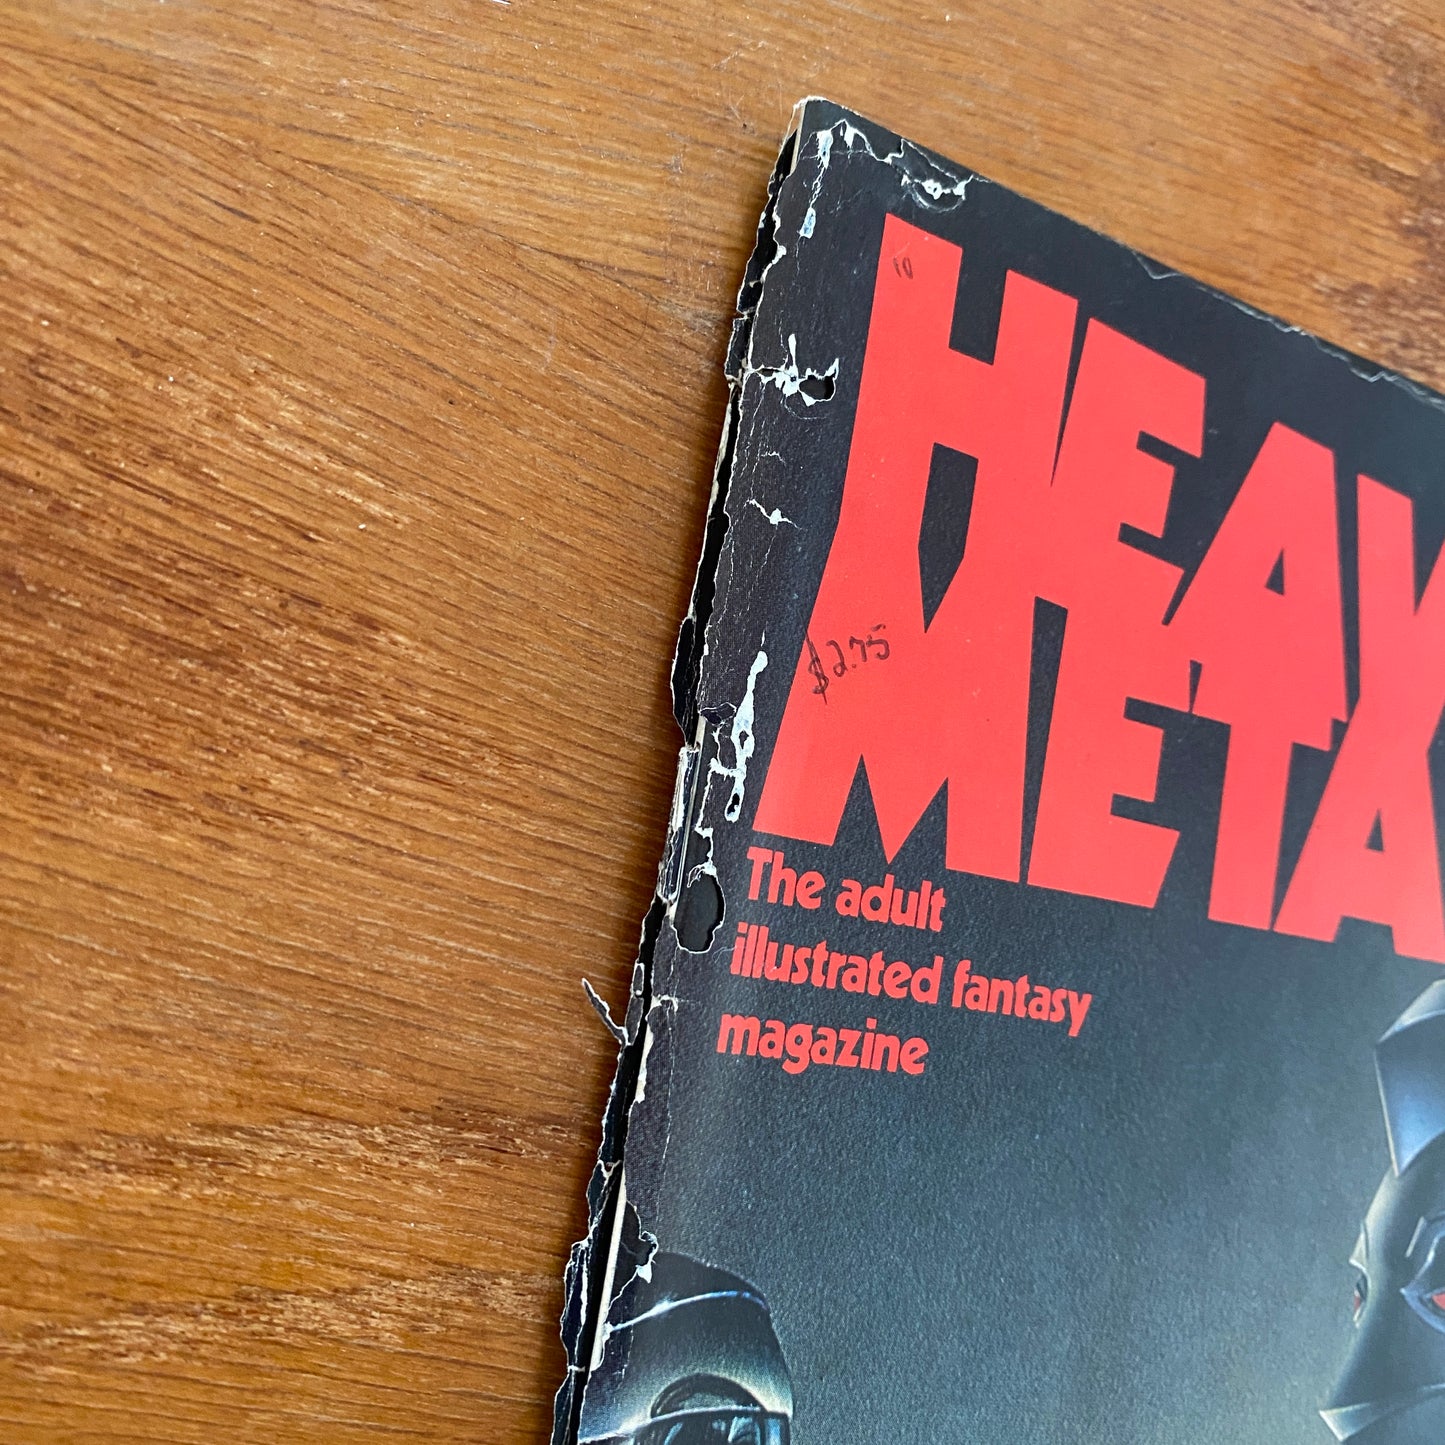 V5.4 Heavy Metal - July 1981